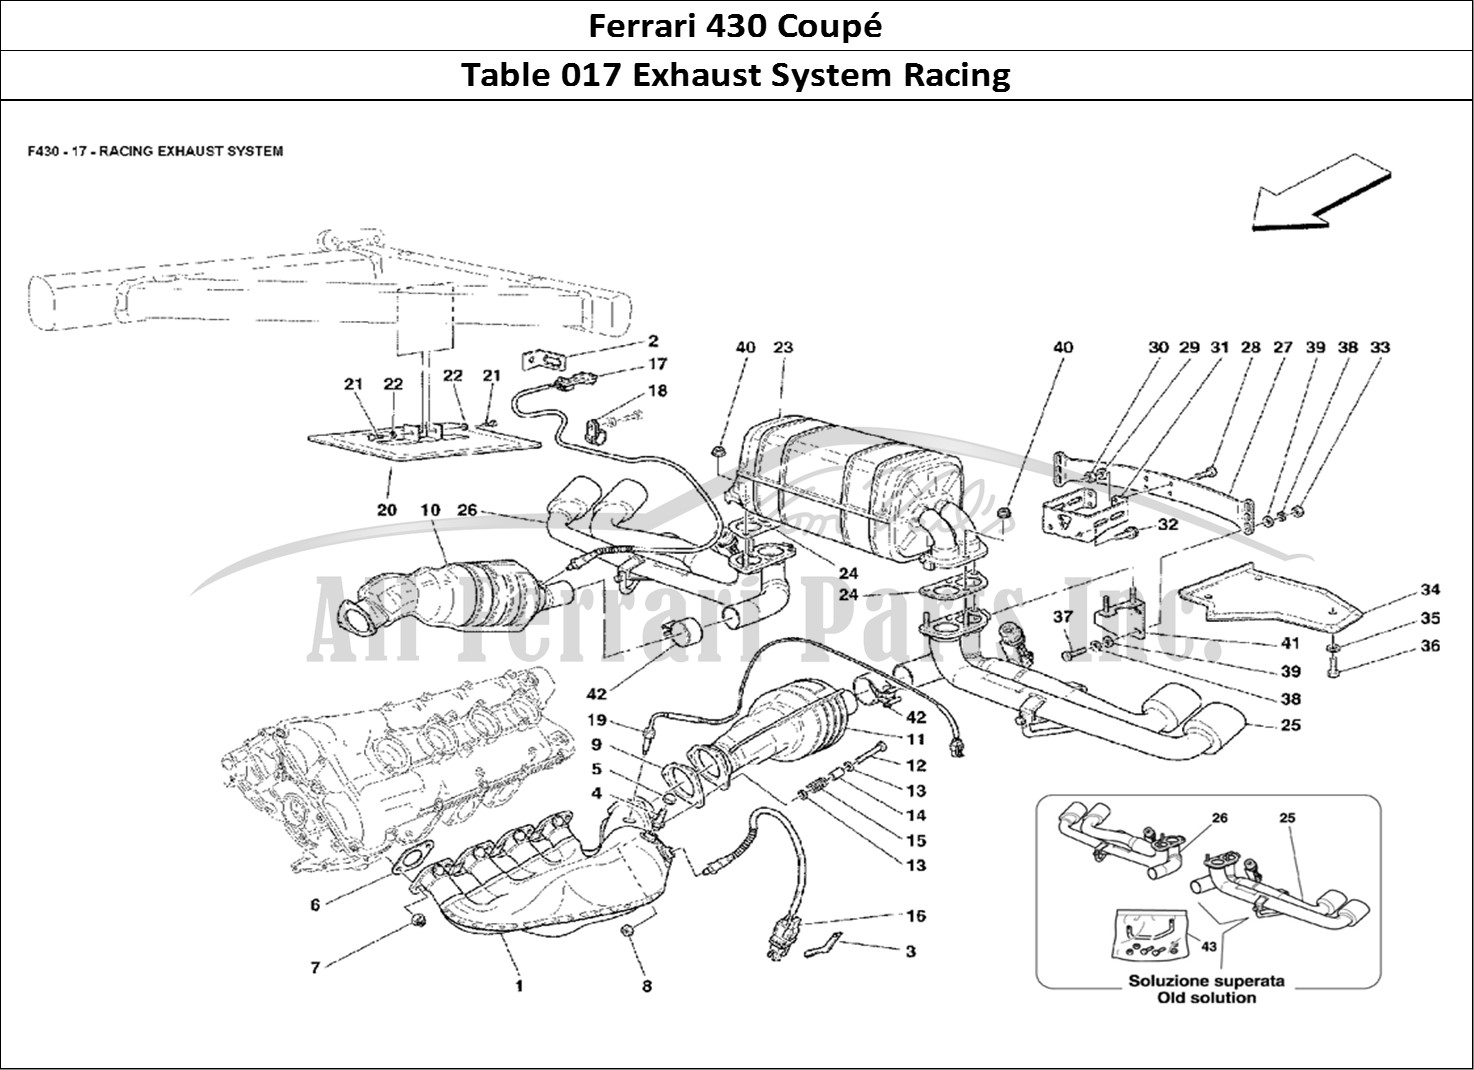 Ferrari Parts Ferrari 430 Coup Page 017 Racing Exhaust System